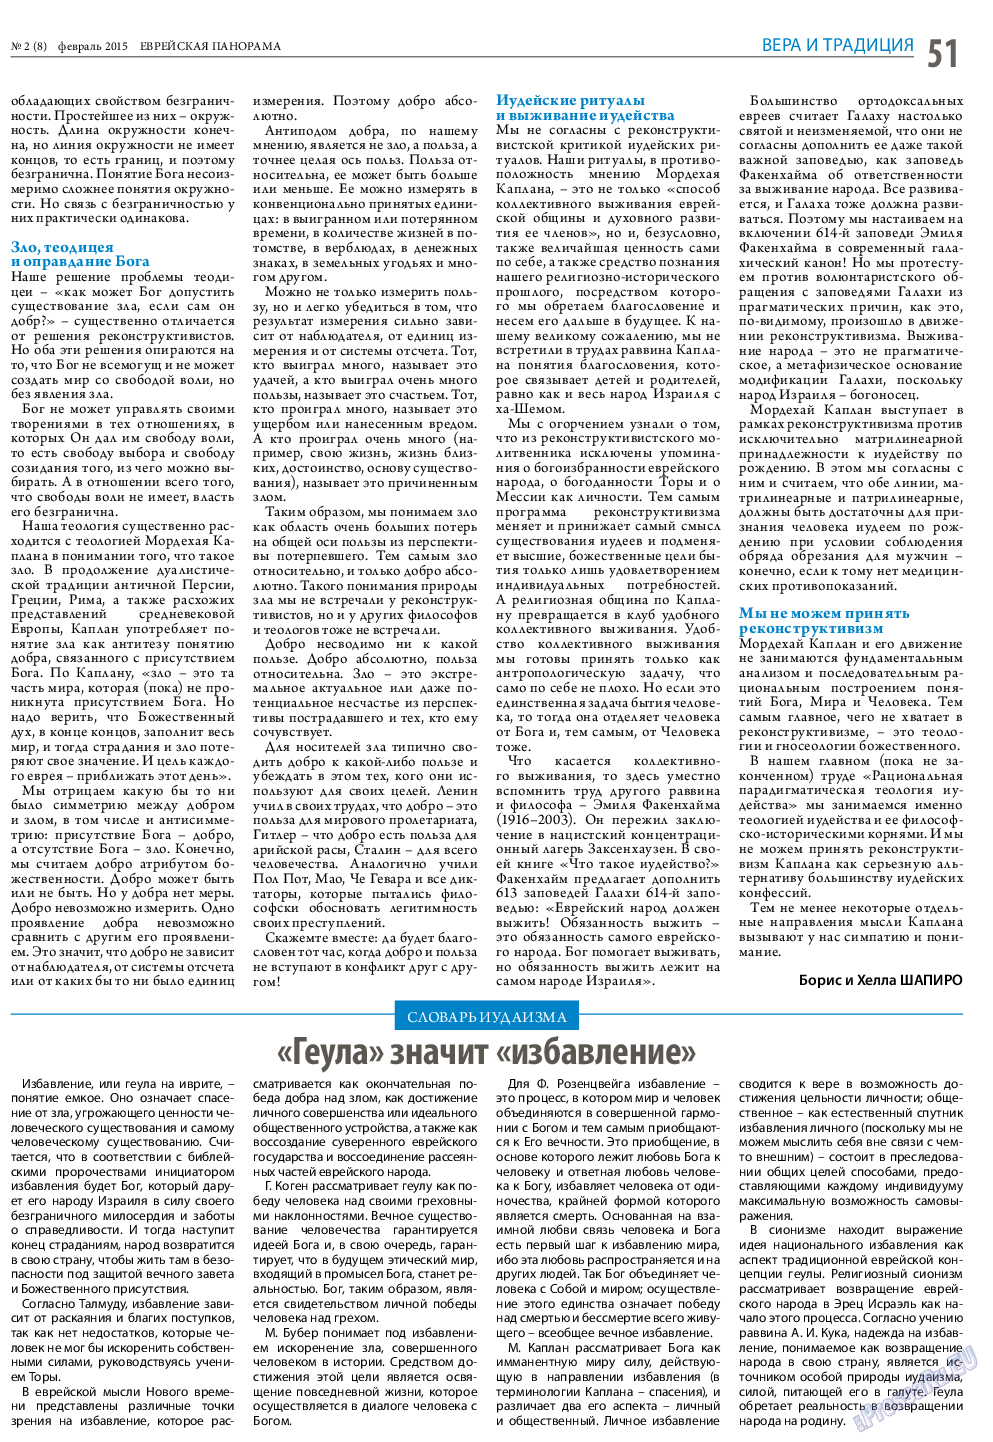 Еврейская панорама, газета. 2015 №2 стр.51